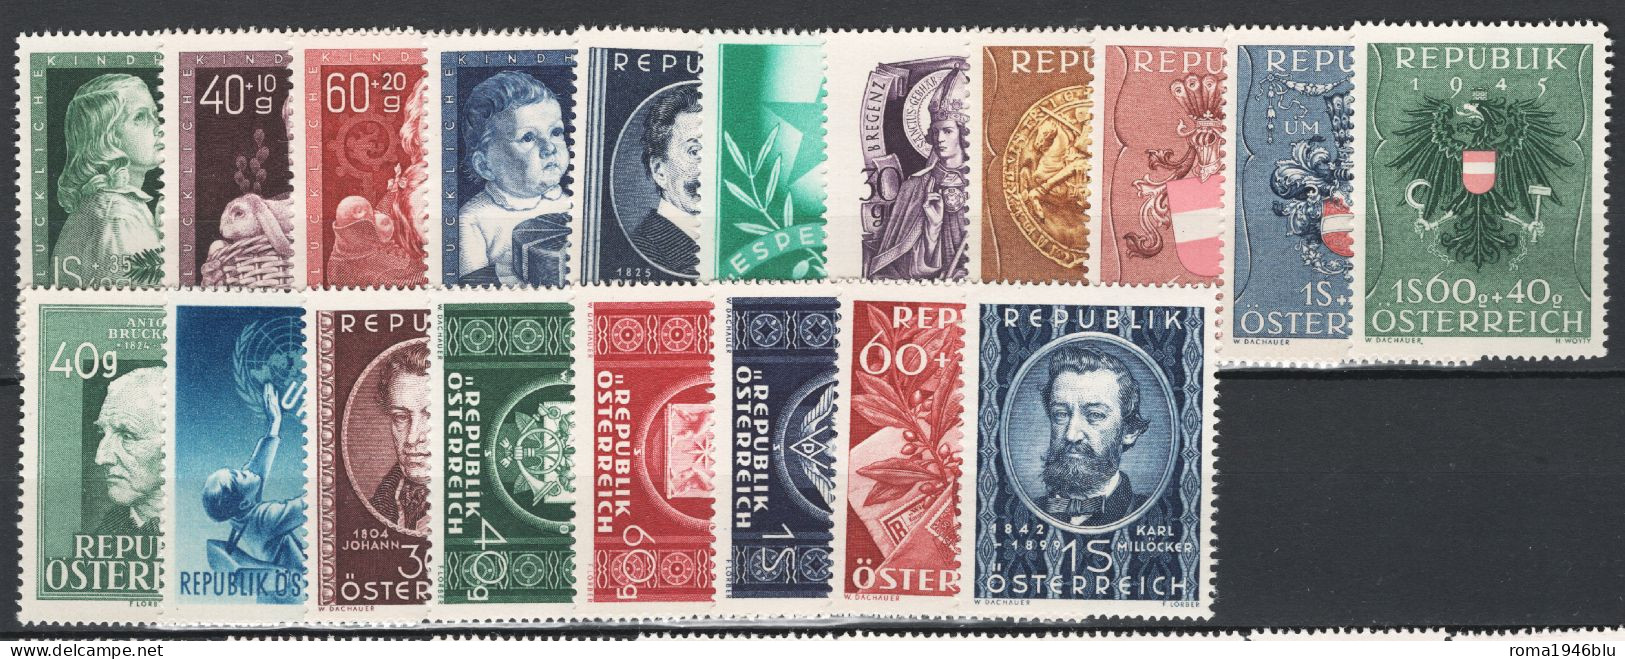 Austria 1949 Annata Completa / Complete Year Set **/MNH VF - Annate Complete